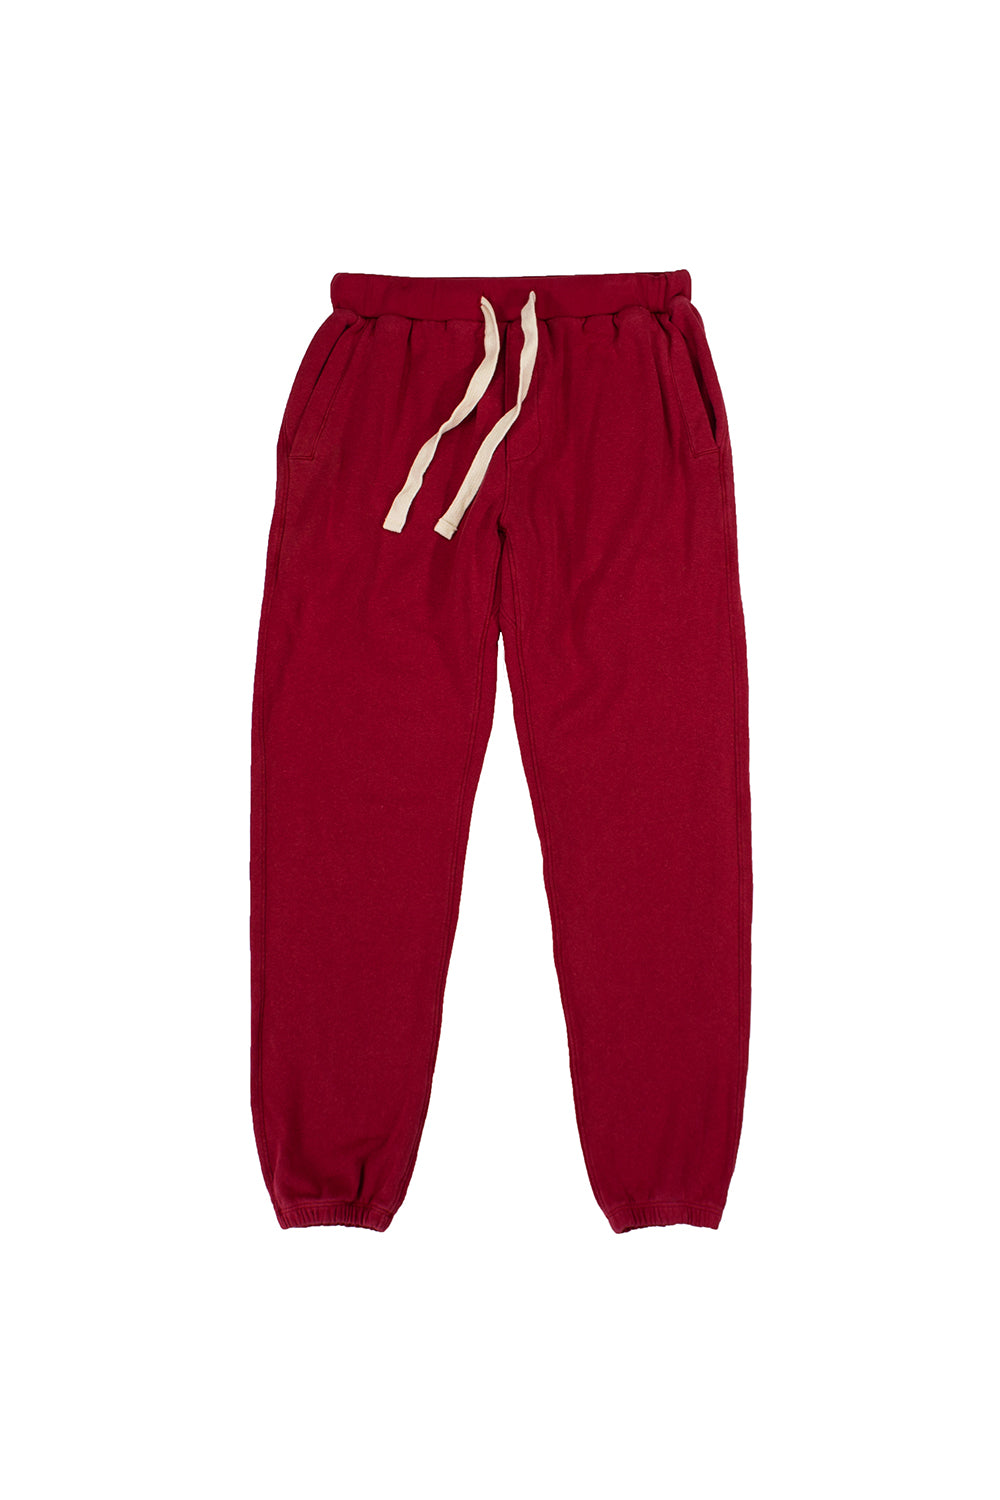 Yelapa Sweatpant | Jungmaven Hemp Clothing & Accessories / Color: Cherry Red